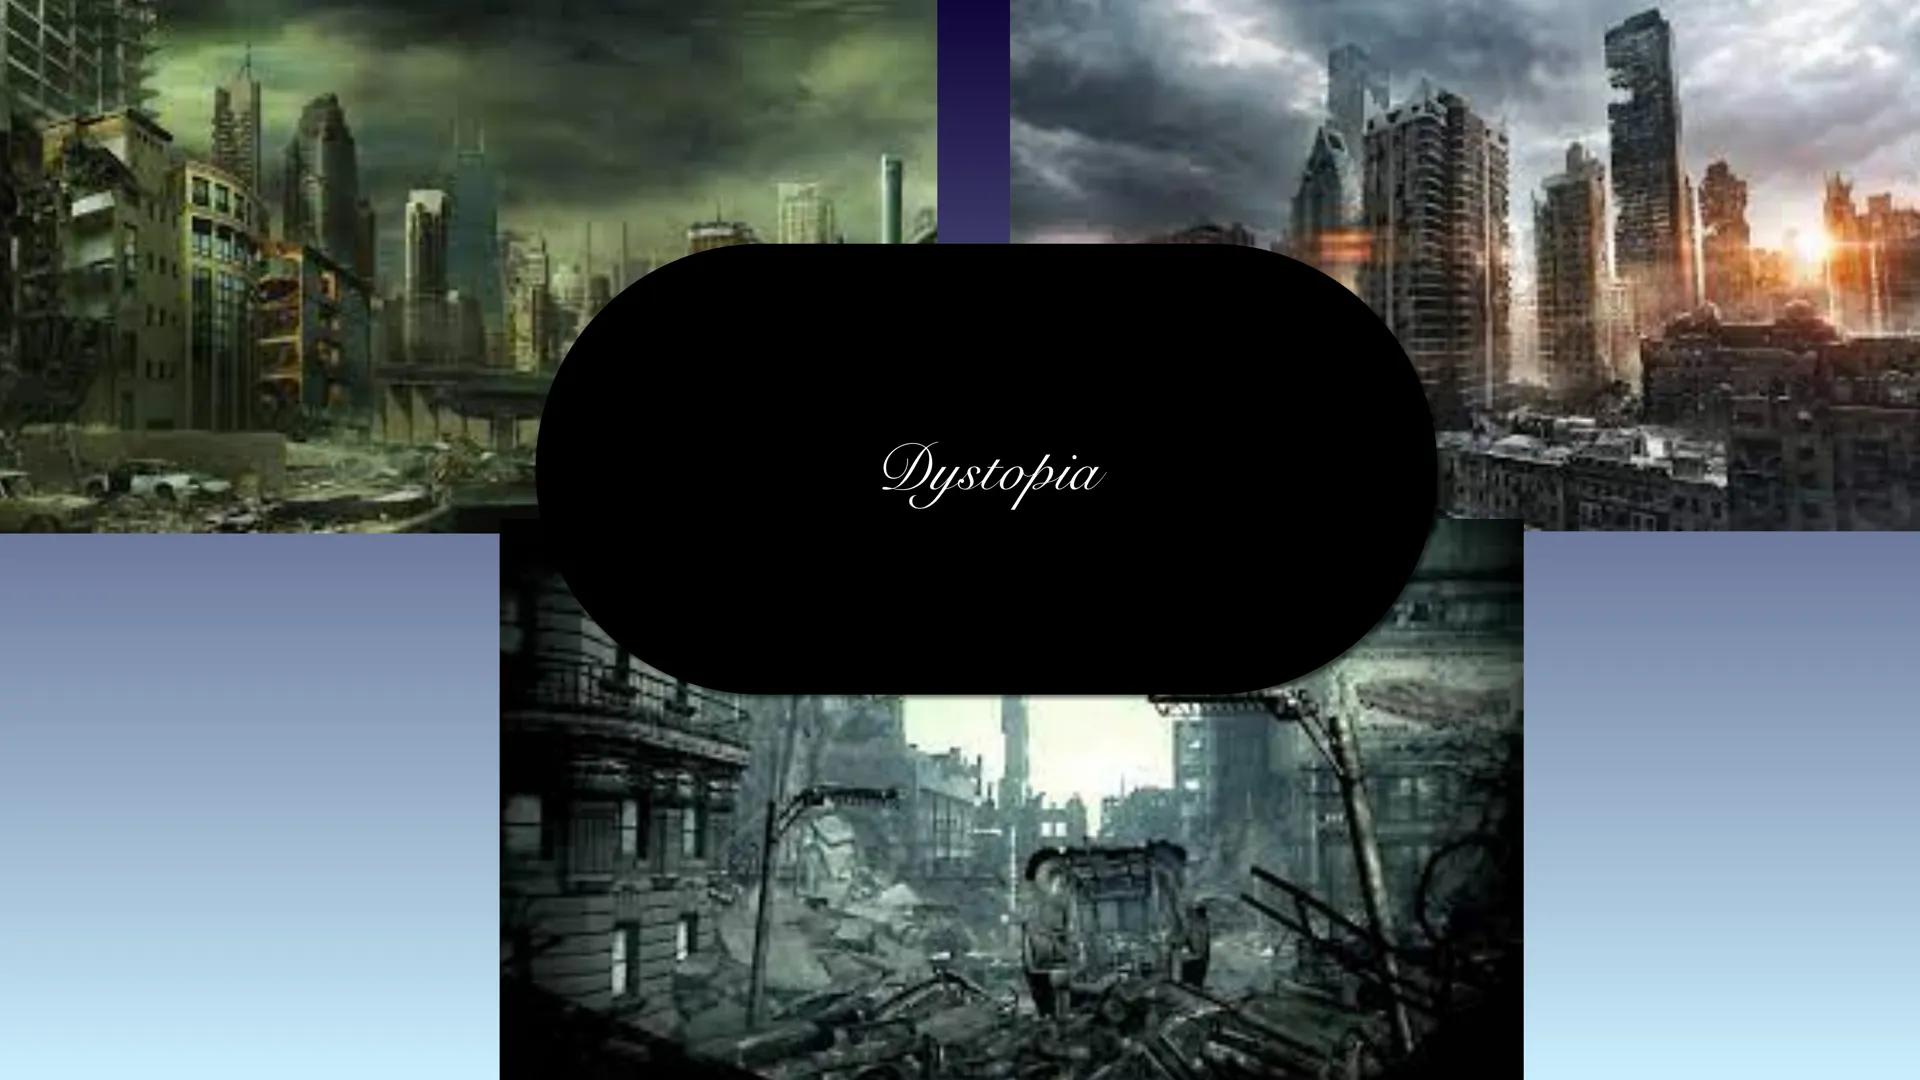 Utopia & Dystopia Content
1. Definition/ characteristics of dystopia & utopia
2. Common aspects
3. Hunger games: Plot summary, dystopian/ ut